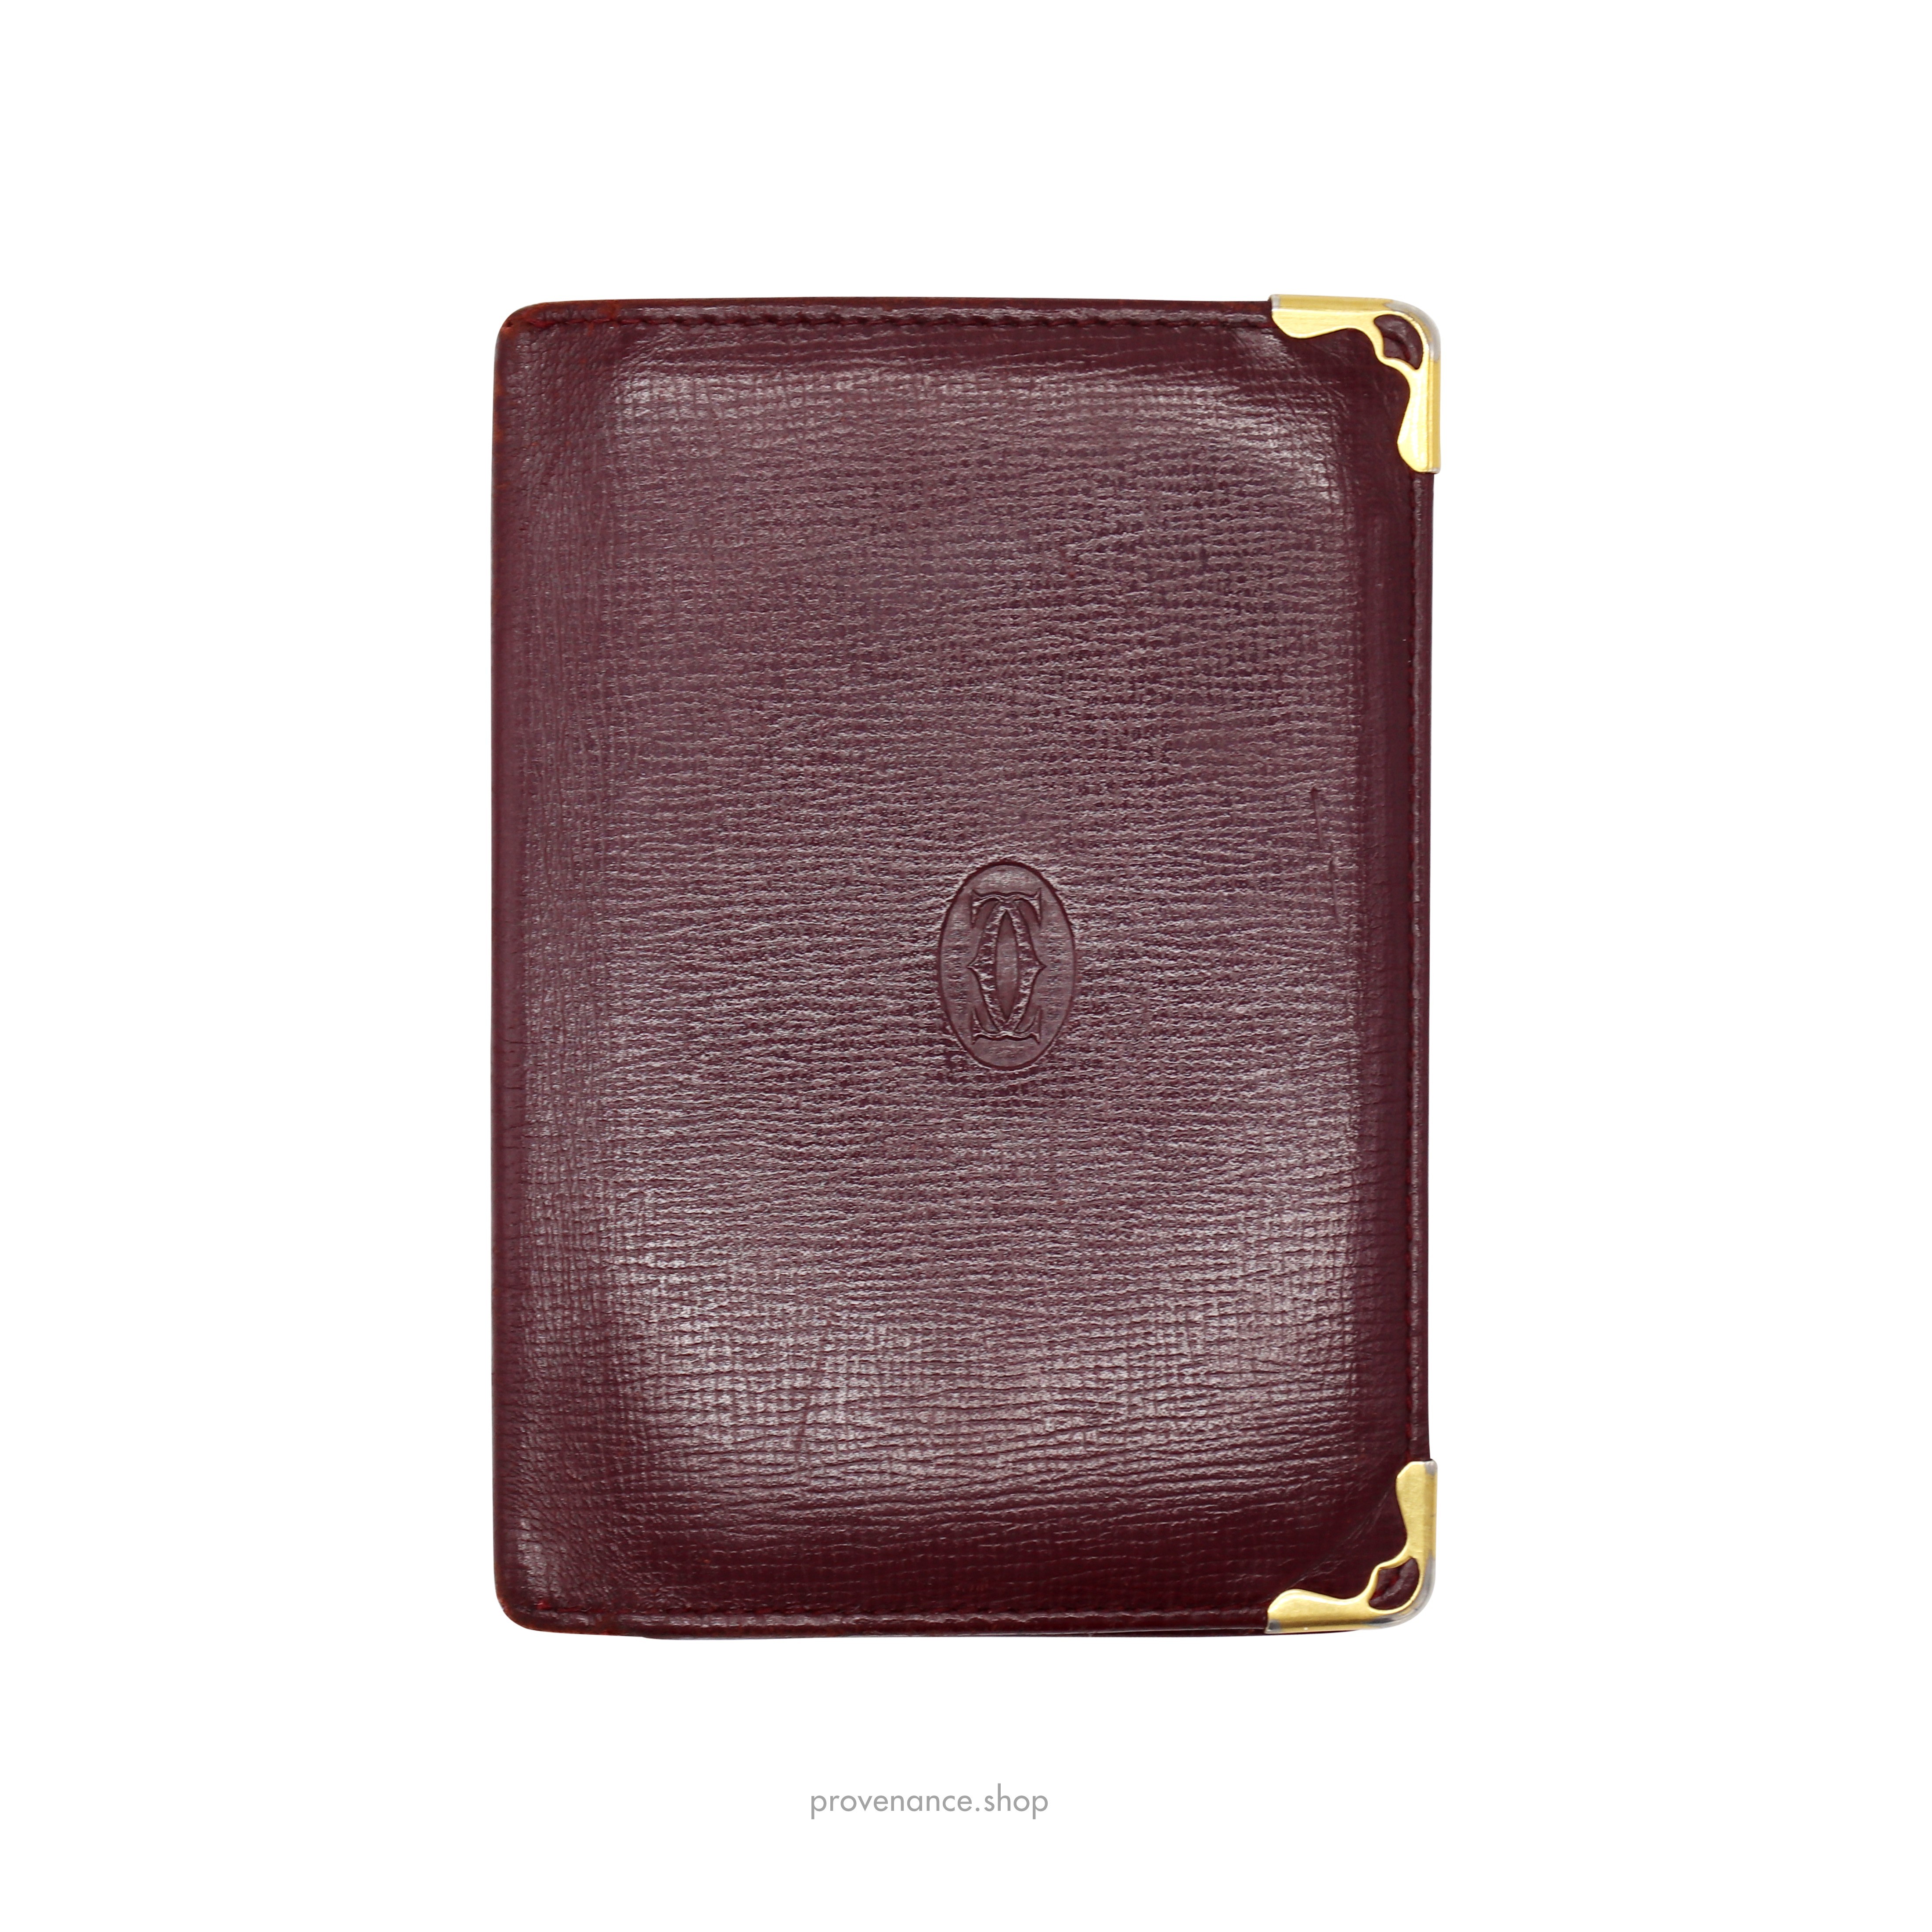 Pocket Organizer Wallet - Burgundy Leather - 1